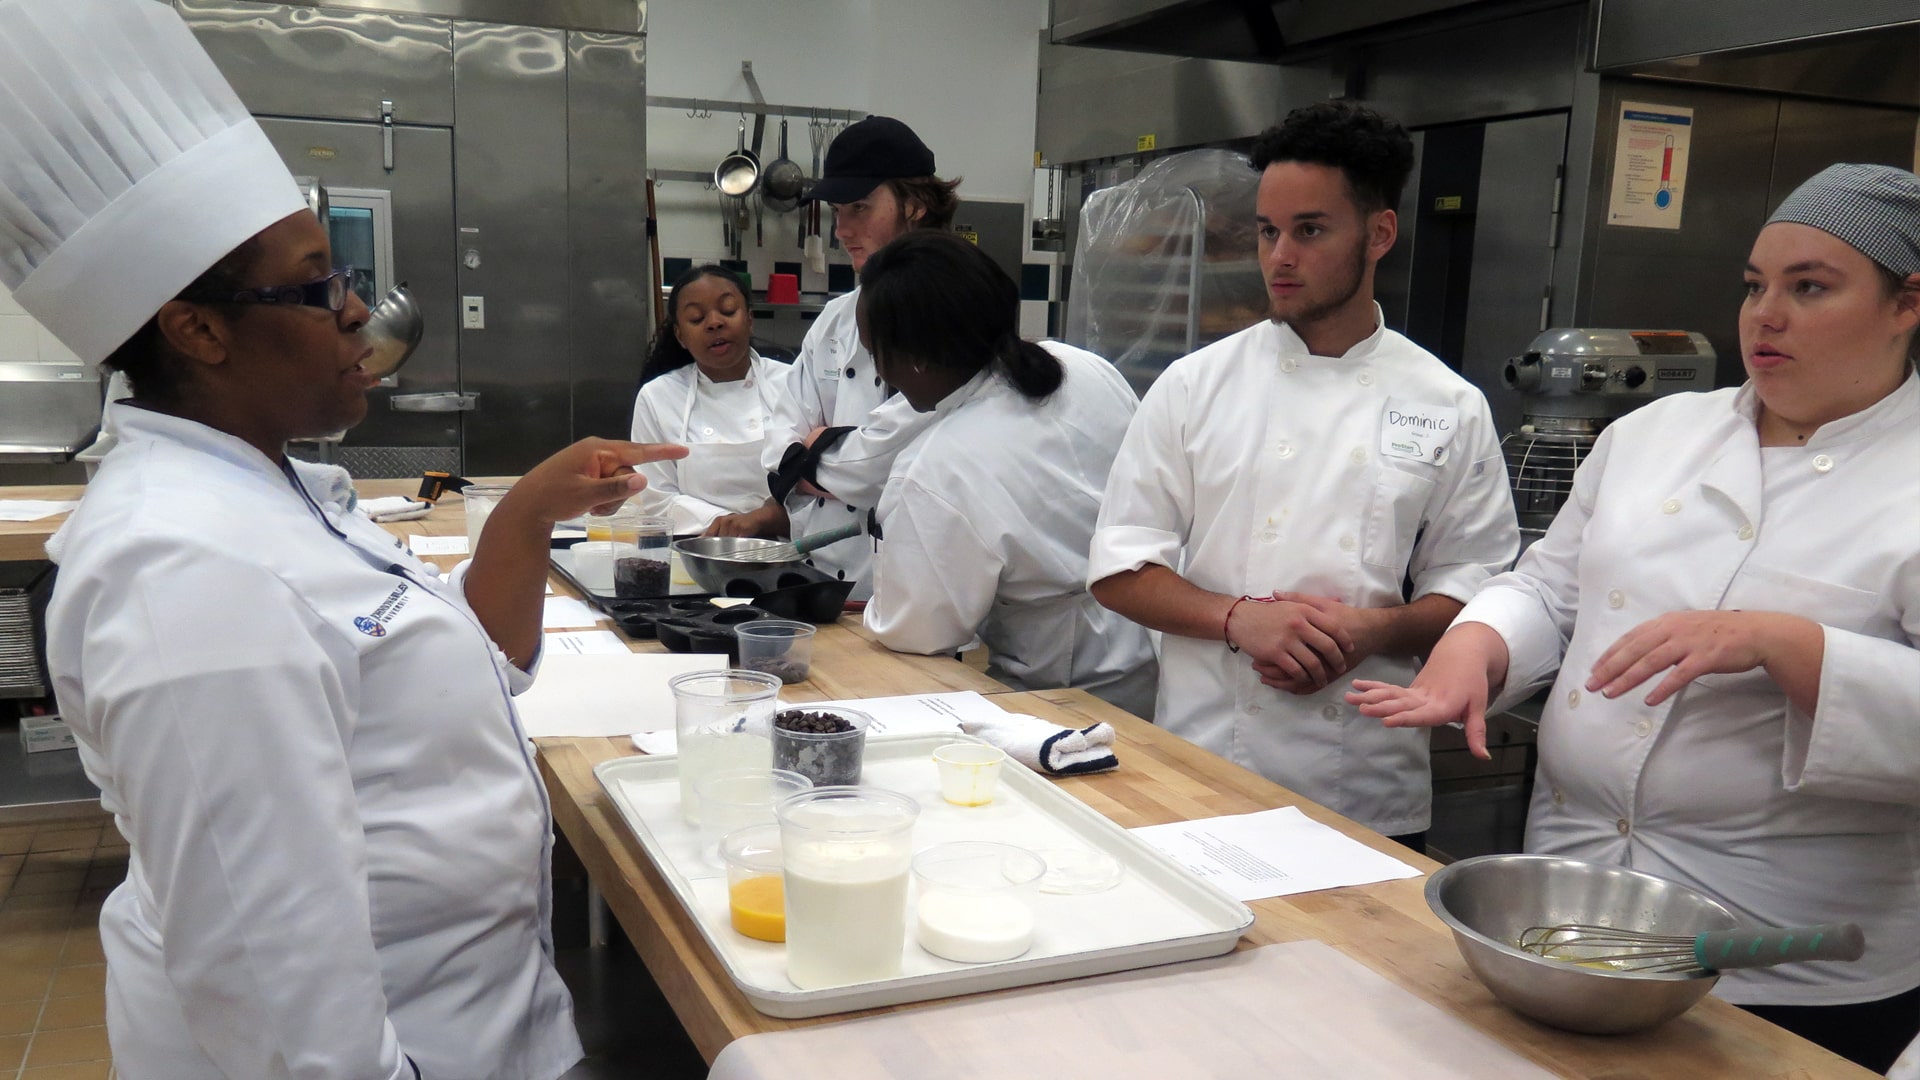 High School students learning culinary skills in JWU culinary lab.